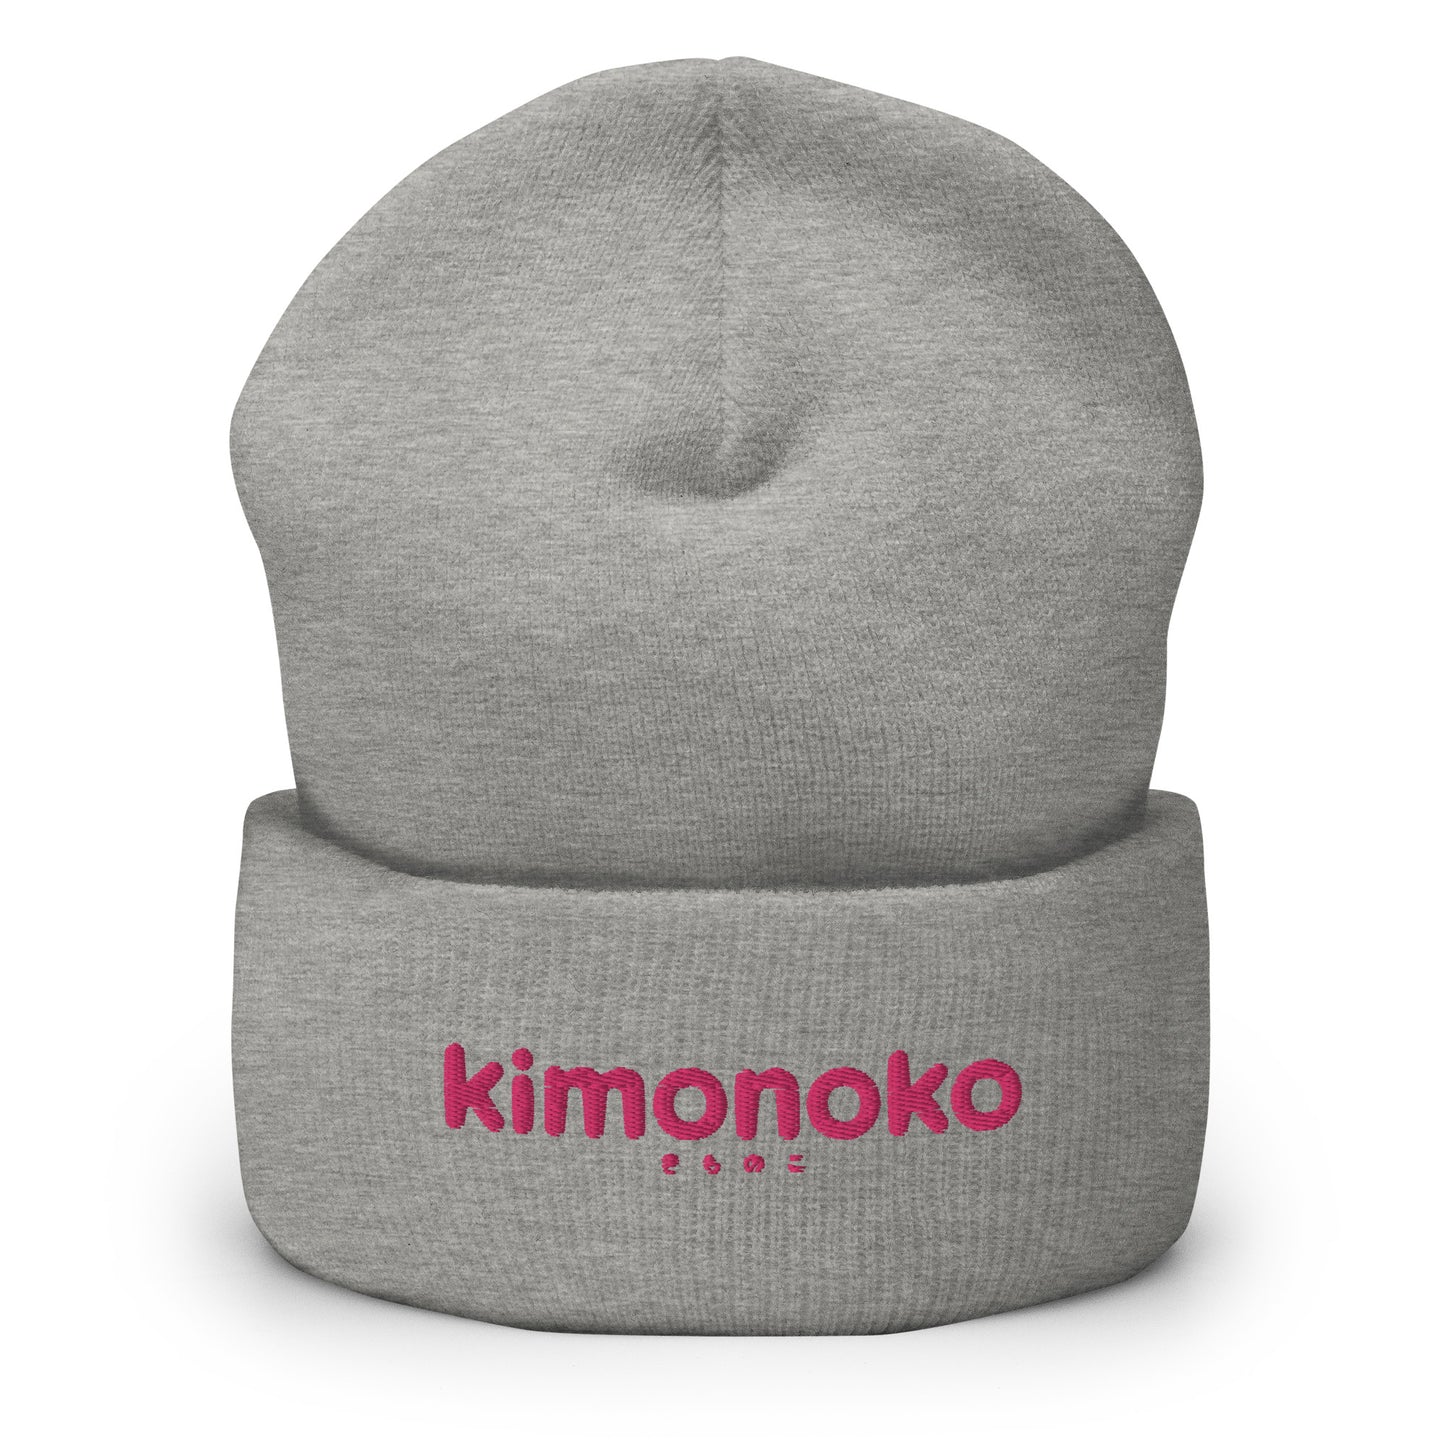 Cuffed Beanie for kimonoko | Knit hats